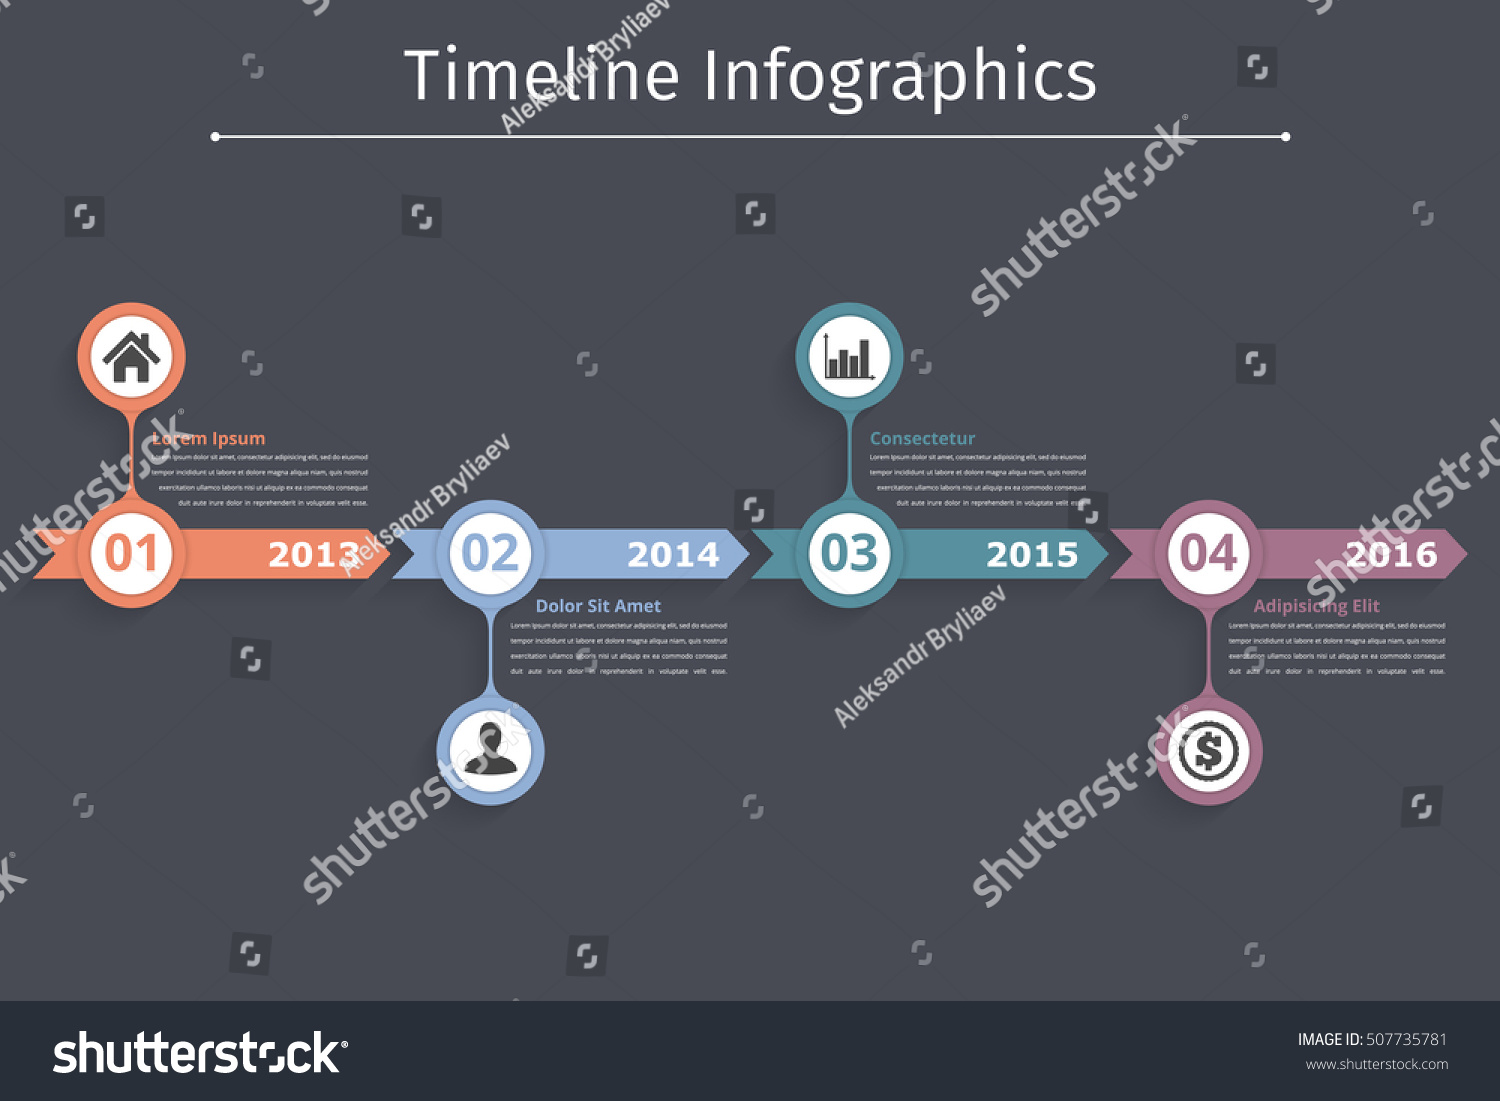 Timeline Infographics Template Arrows Flowchart Workflow เวกเตอร์สต็อก ปลอดค่าลิขสิทธิ์ 507735781 7307